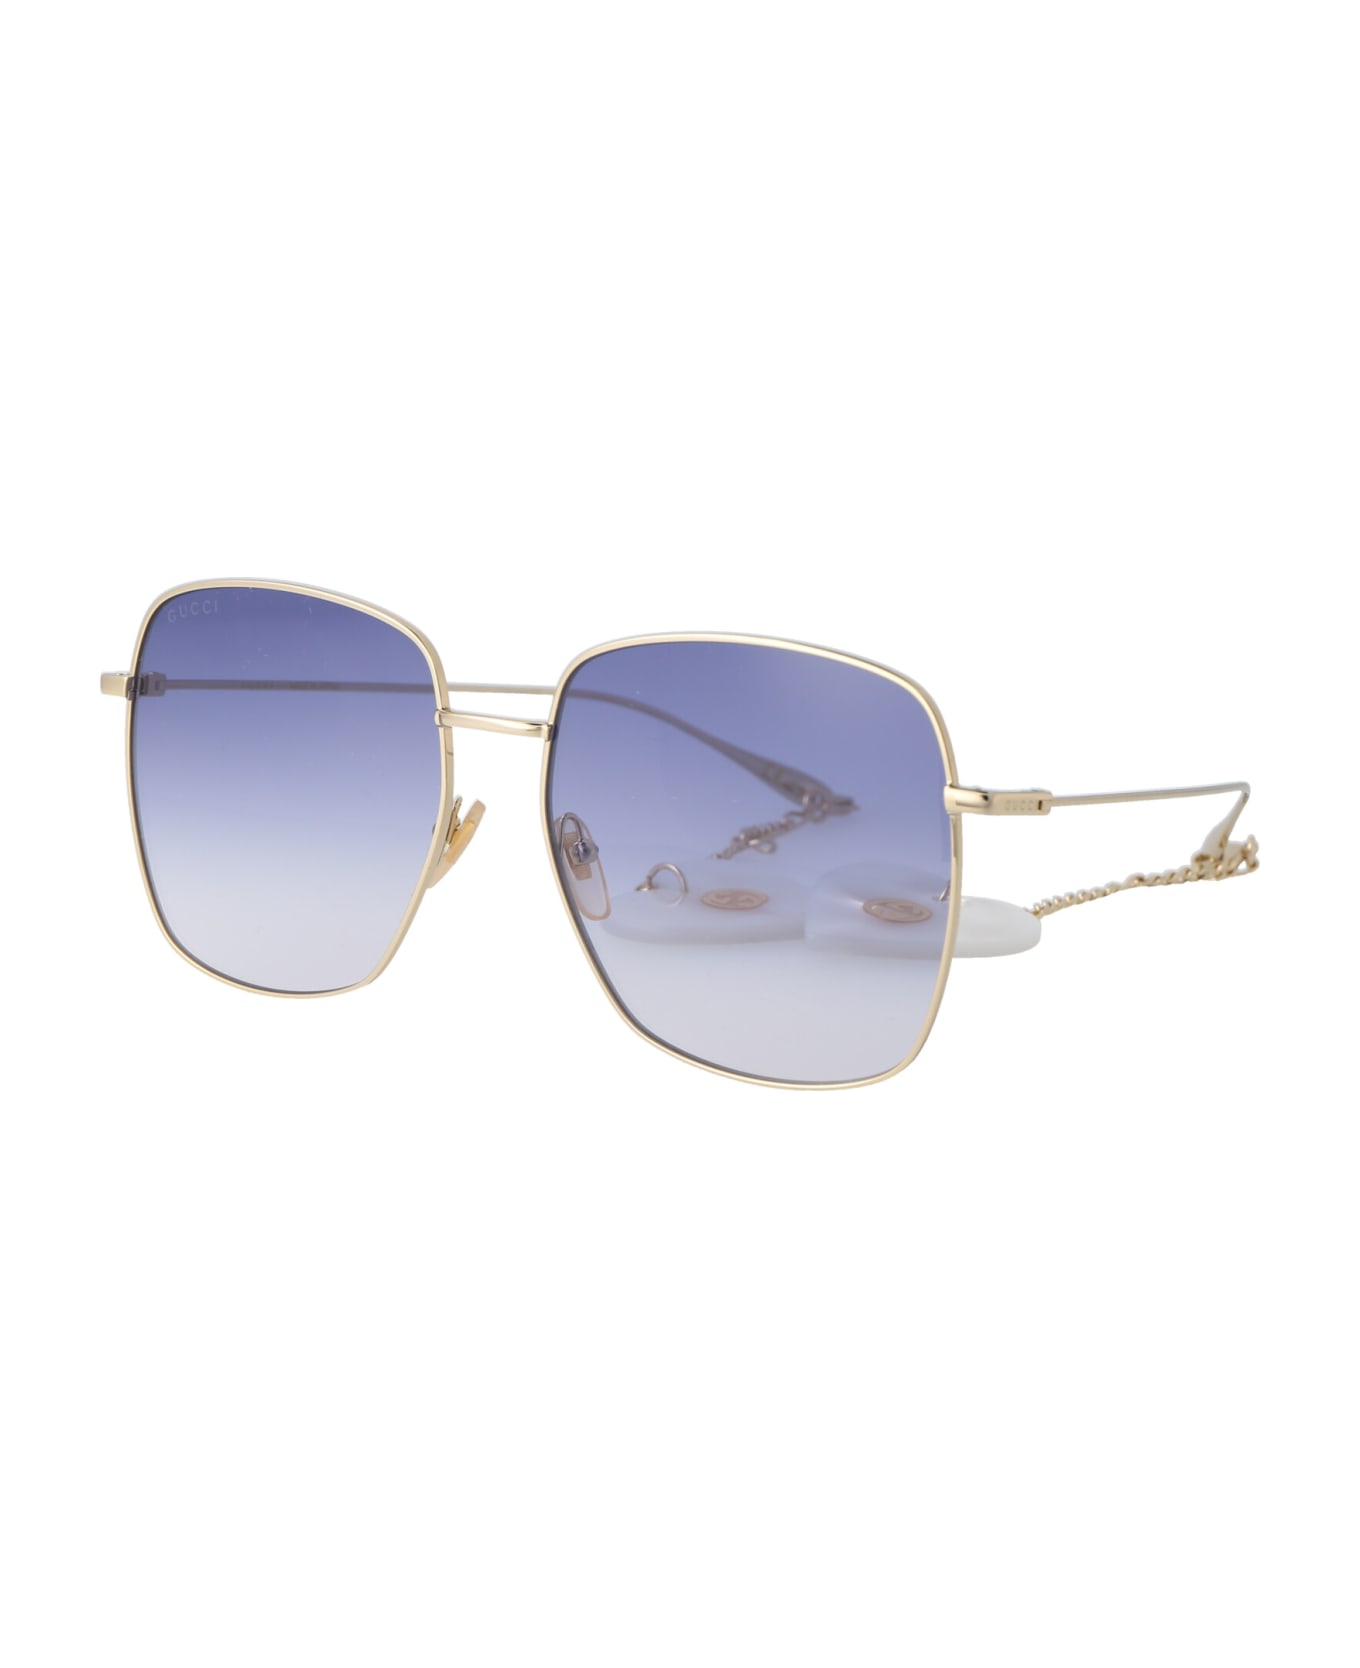 Gucci Eyewear Gg1031s Sunglasses - 004 GOLD GOLD VIOLET